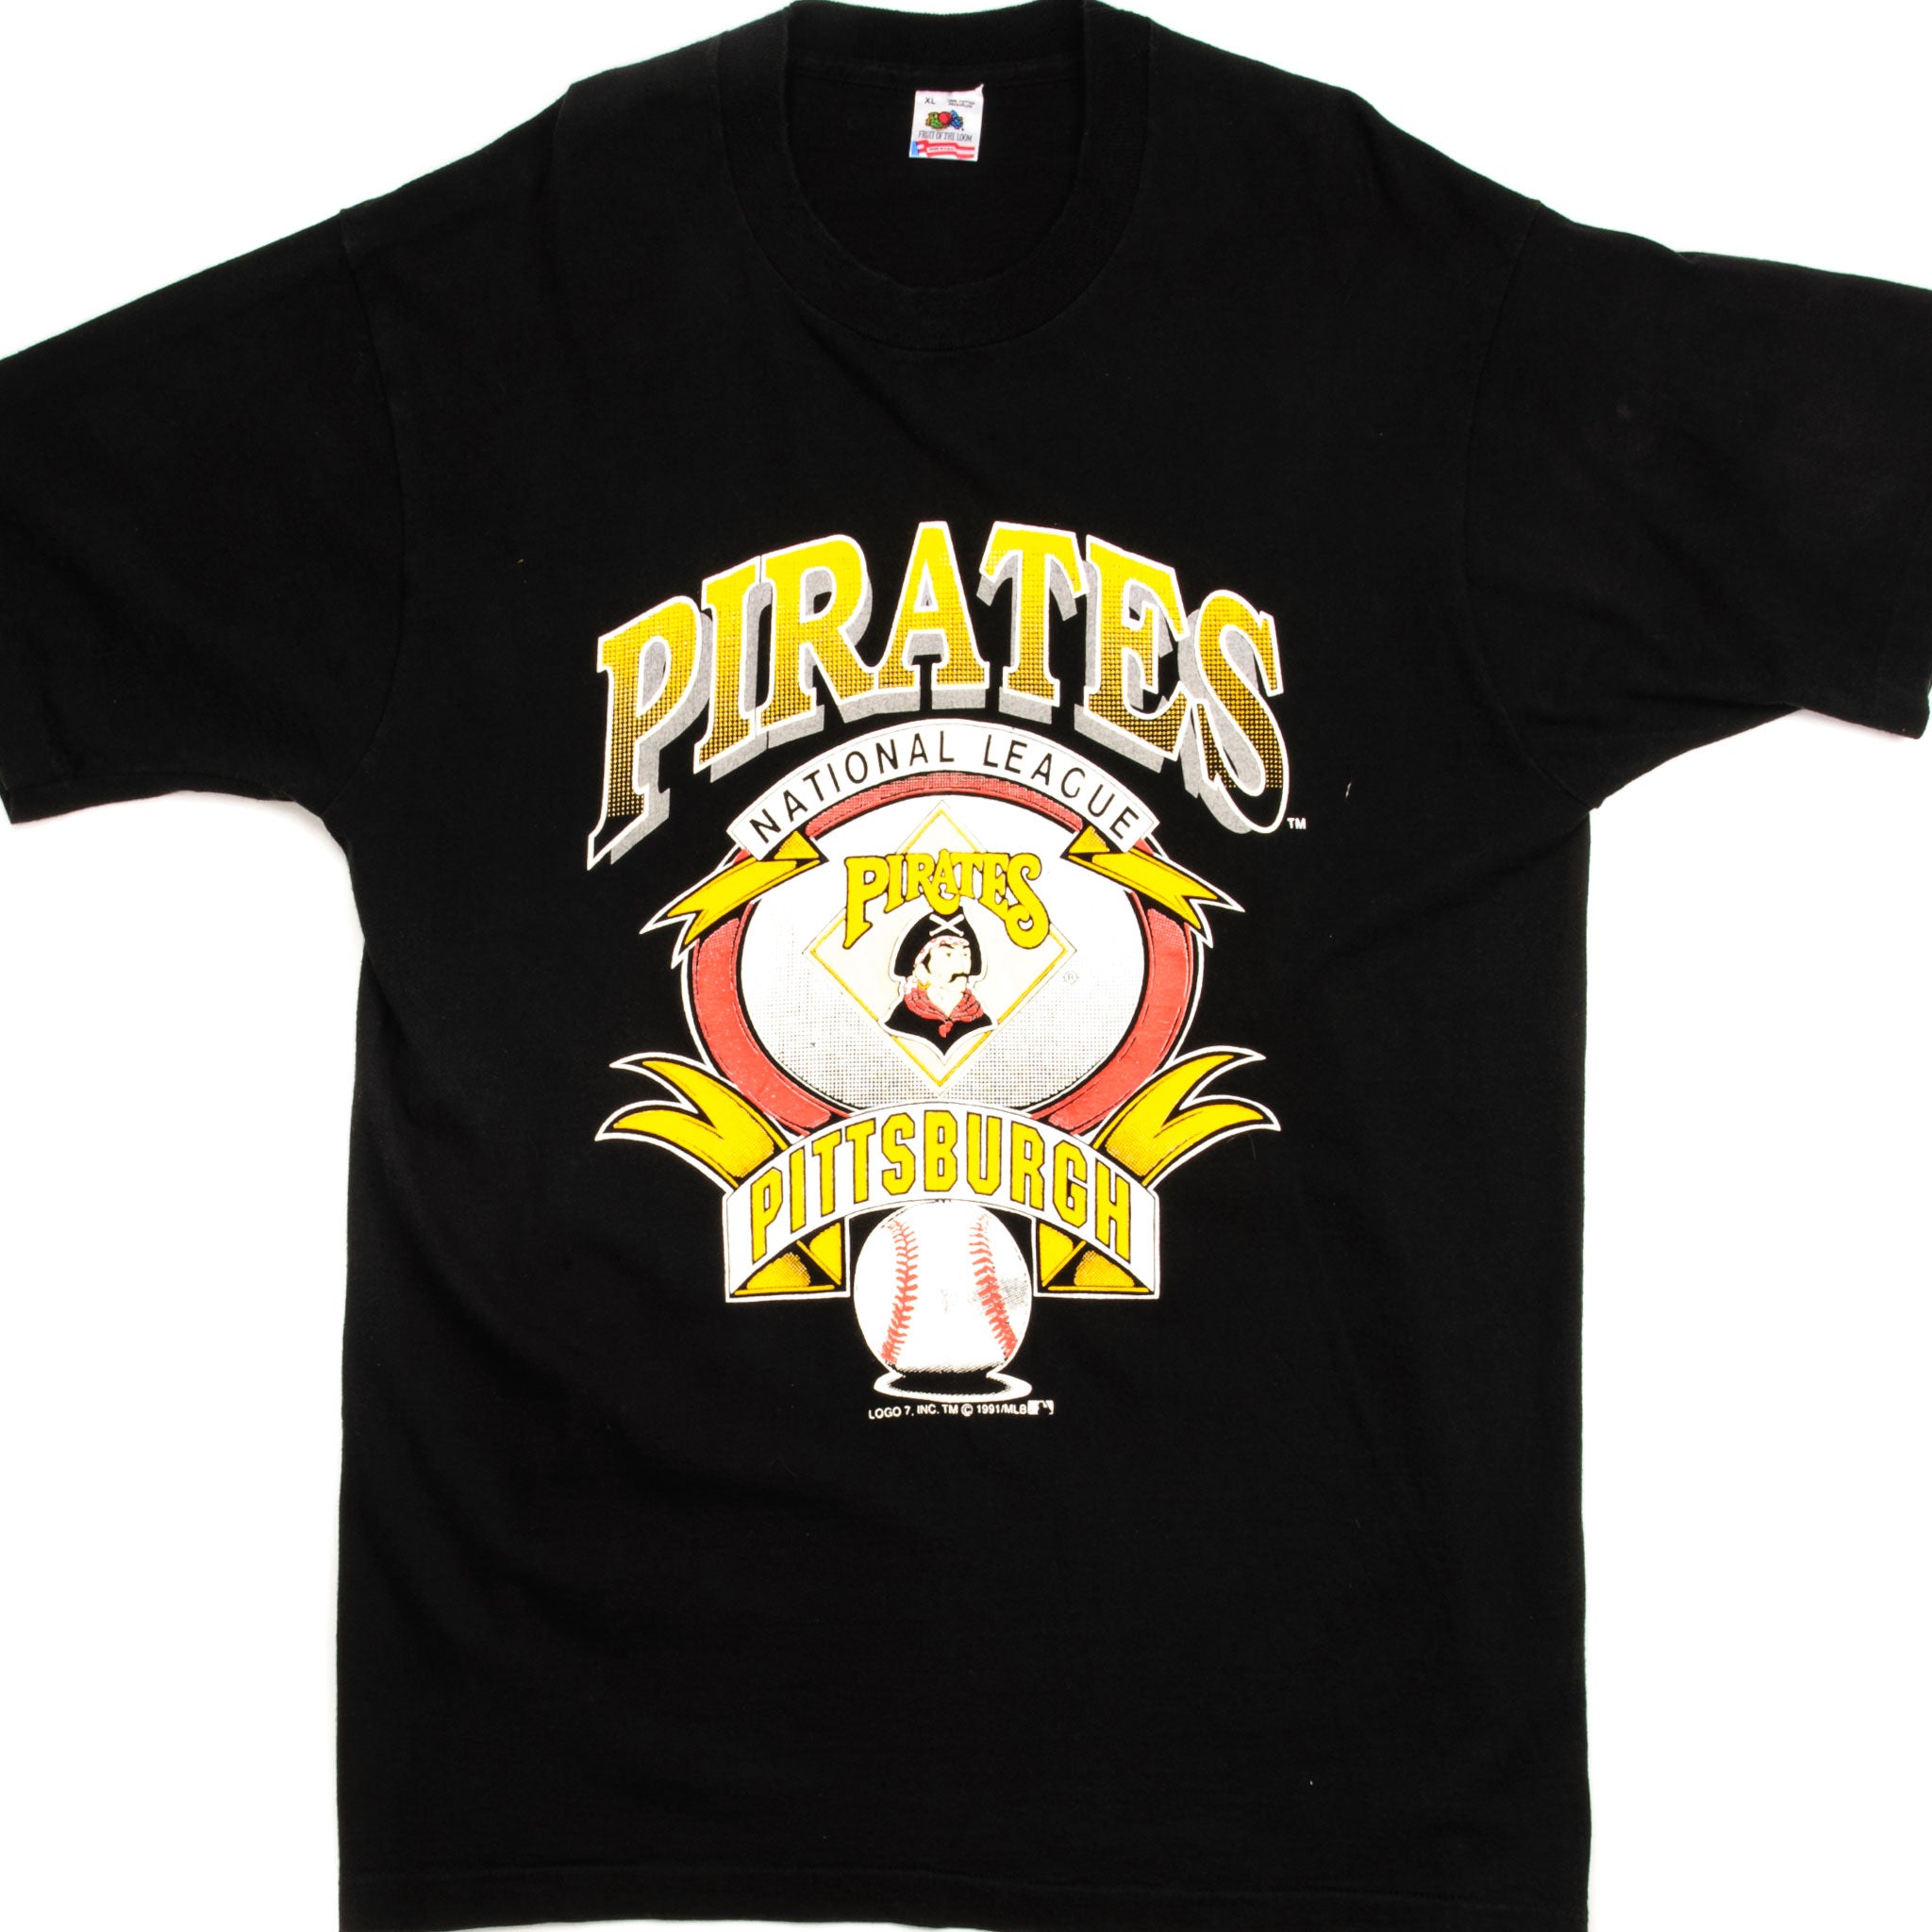 Pittsburgh Pirates T-Shirt, Pirates Shirts, Pirates Baseball Shirts, Tees